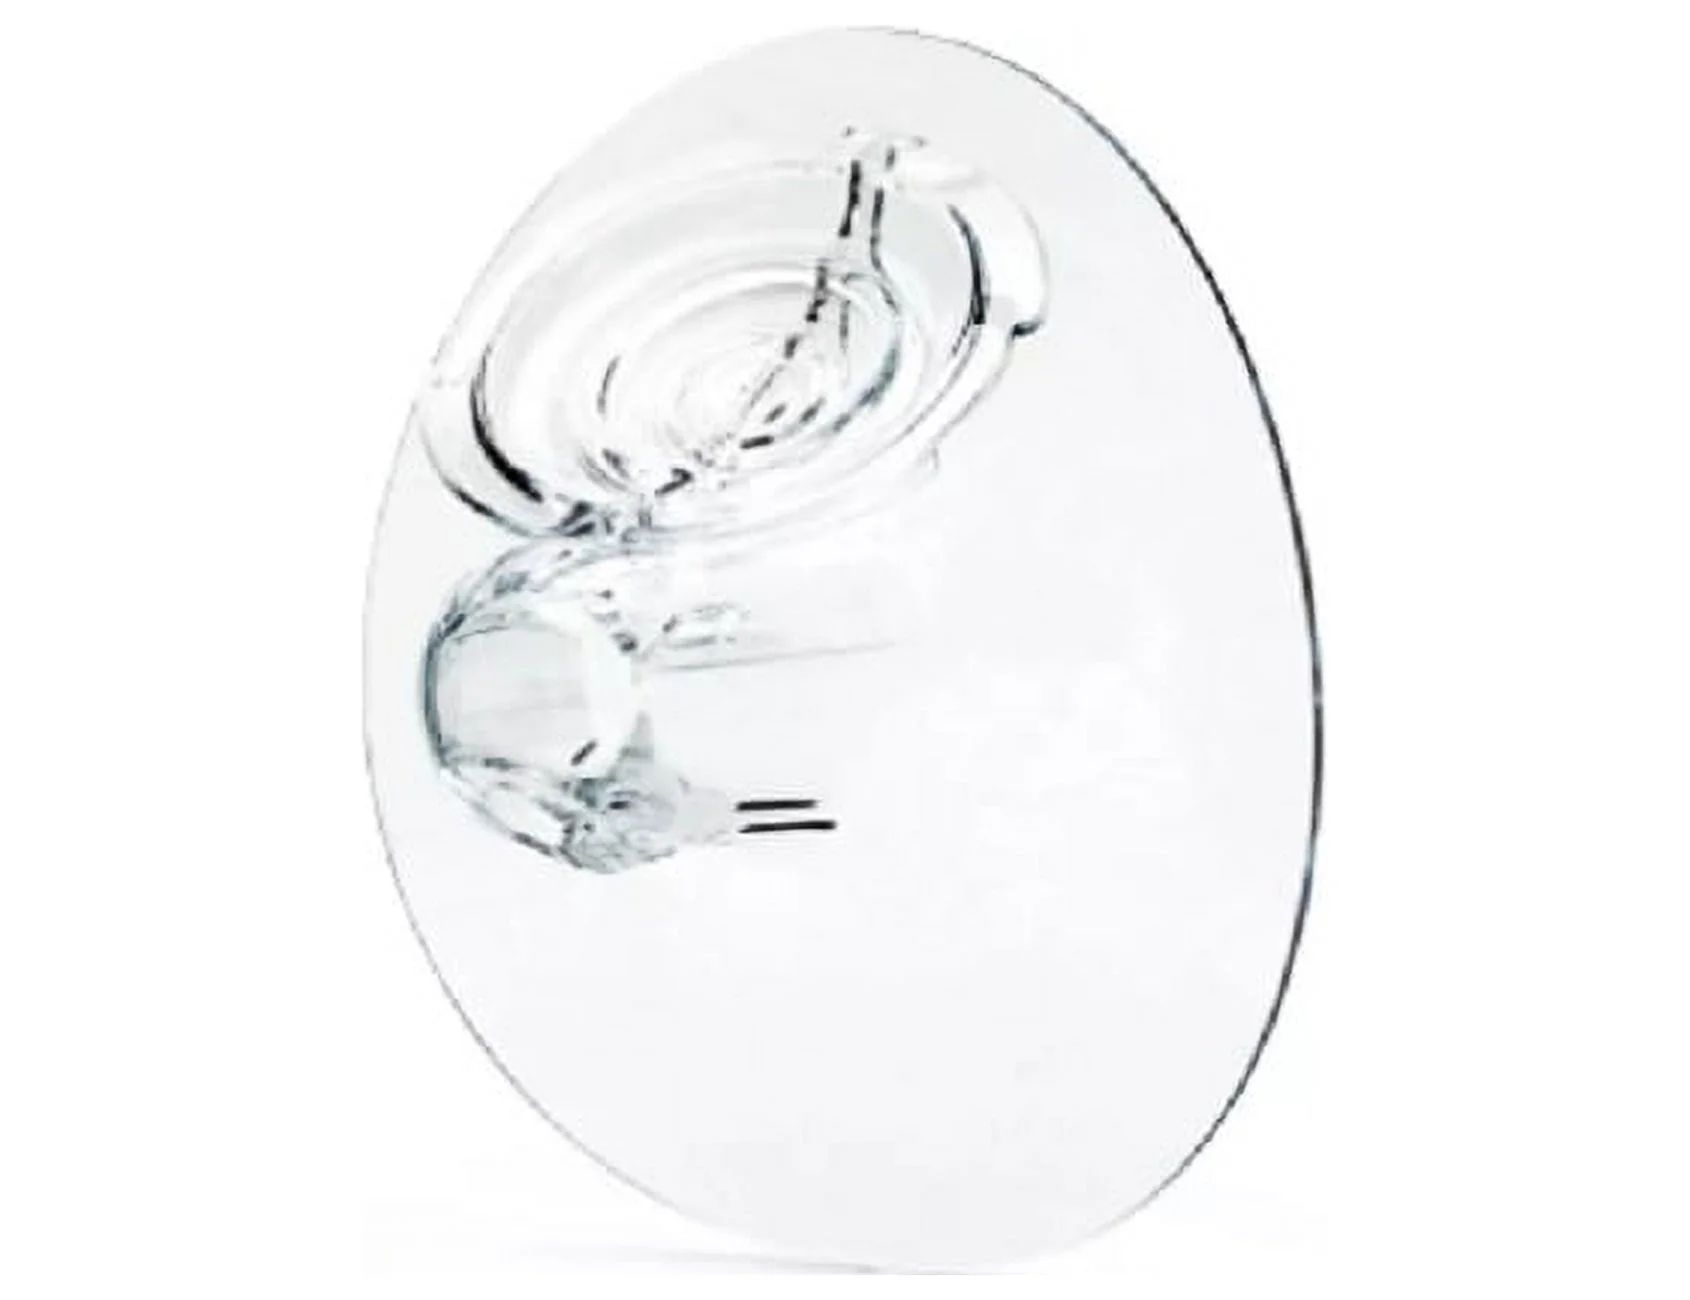 Elvie EP01-PUA-BSS02 Pump Breast Shield Clear 21mm (2 pack) | Walmart (US)